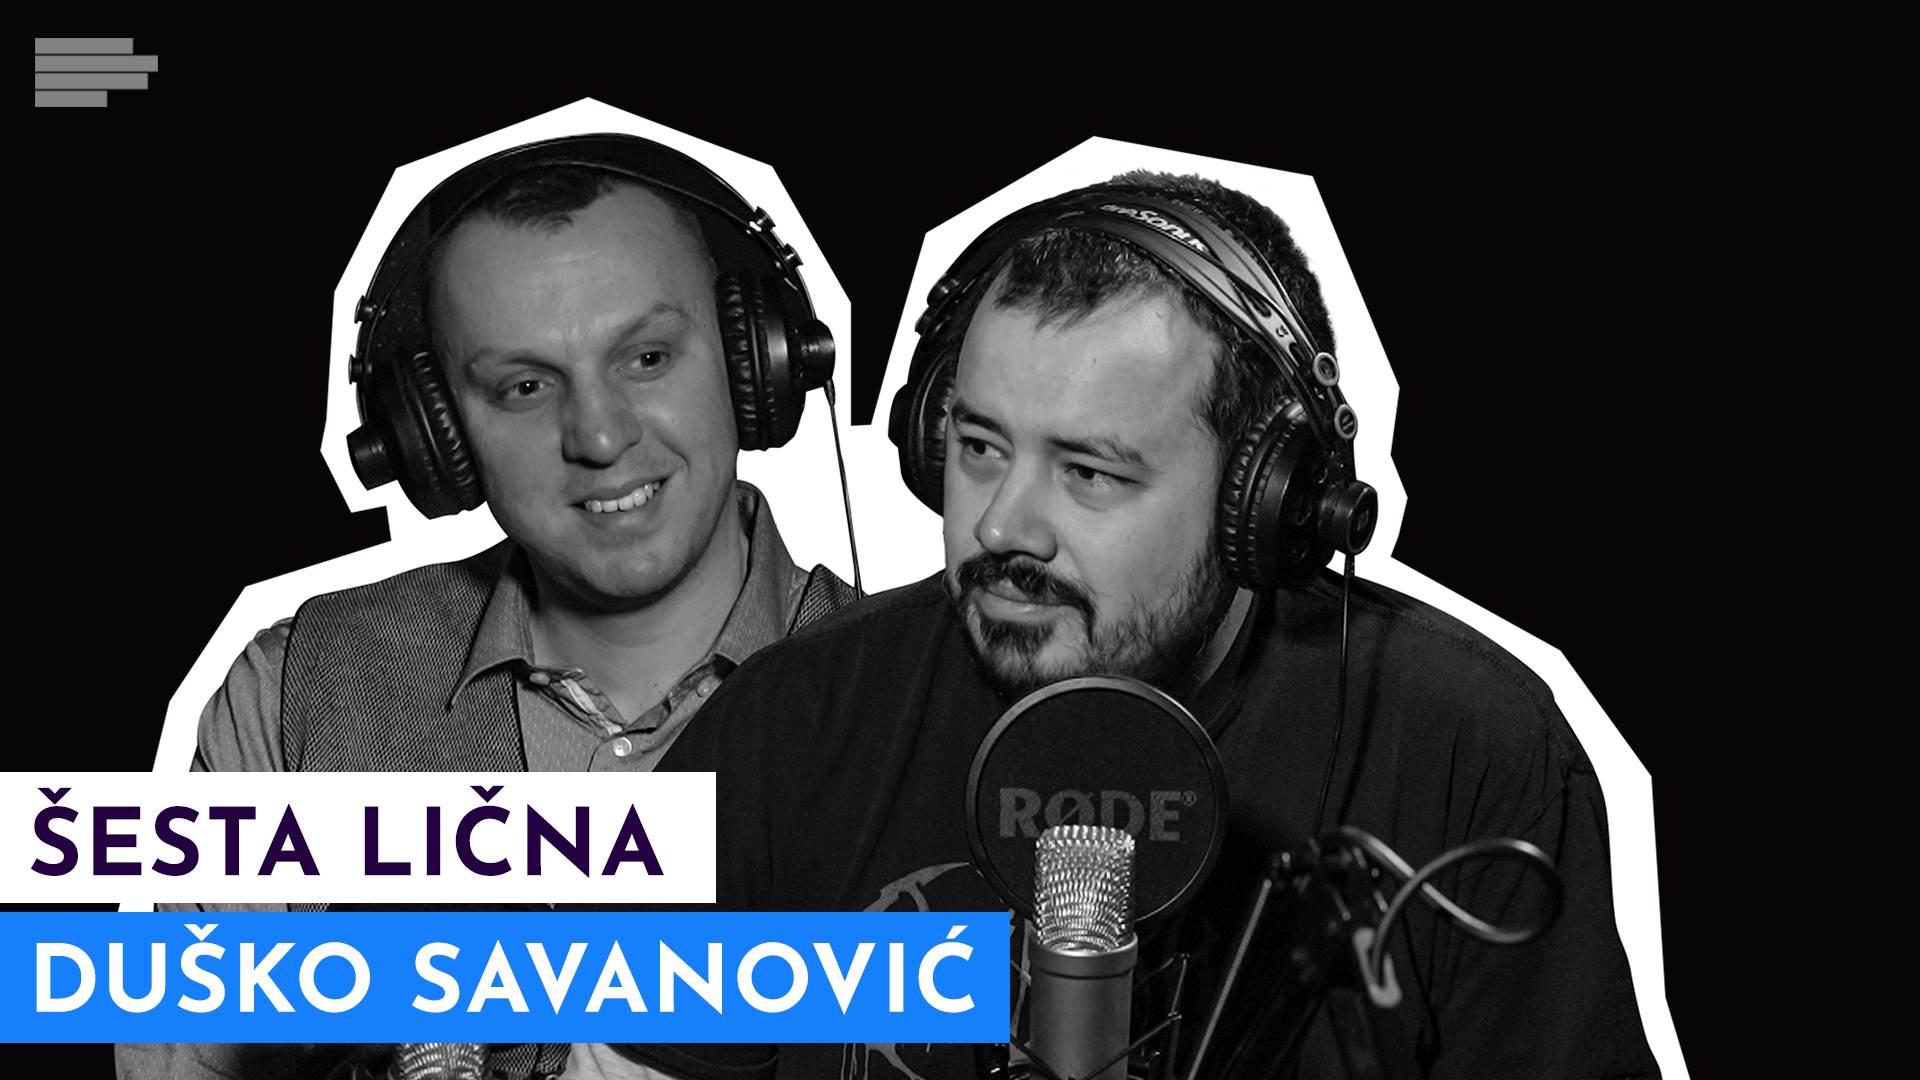  Mondo-Podcast-Sesta-licna-Dusko-Savanovic 